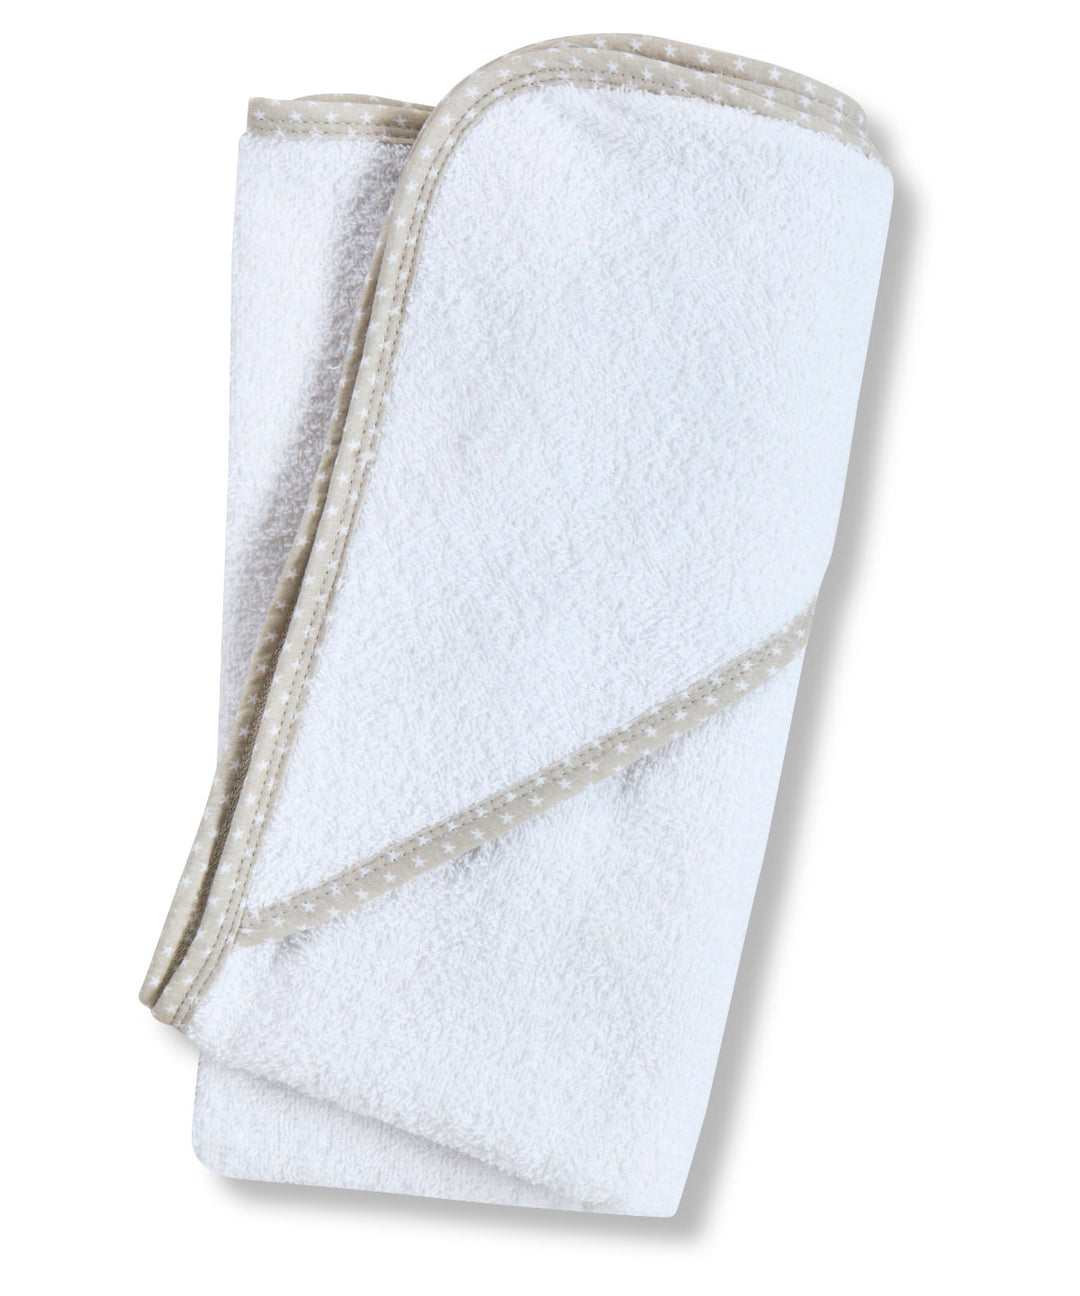 Mabel & Fox - Hooded Towels (2 Pack)